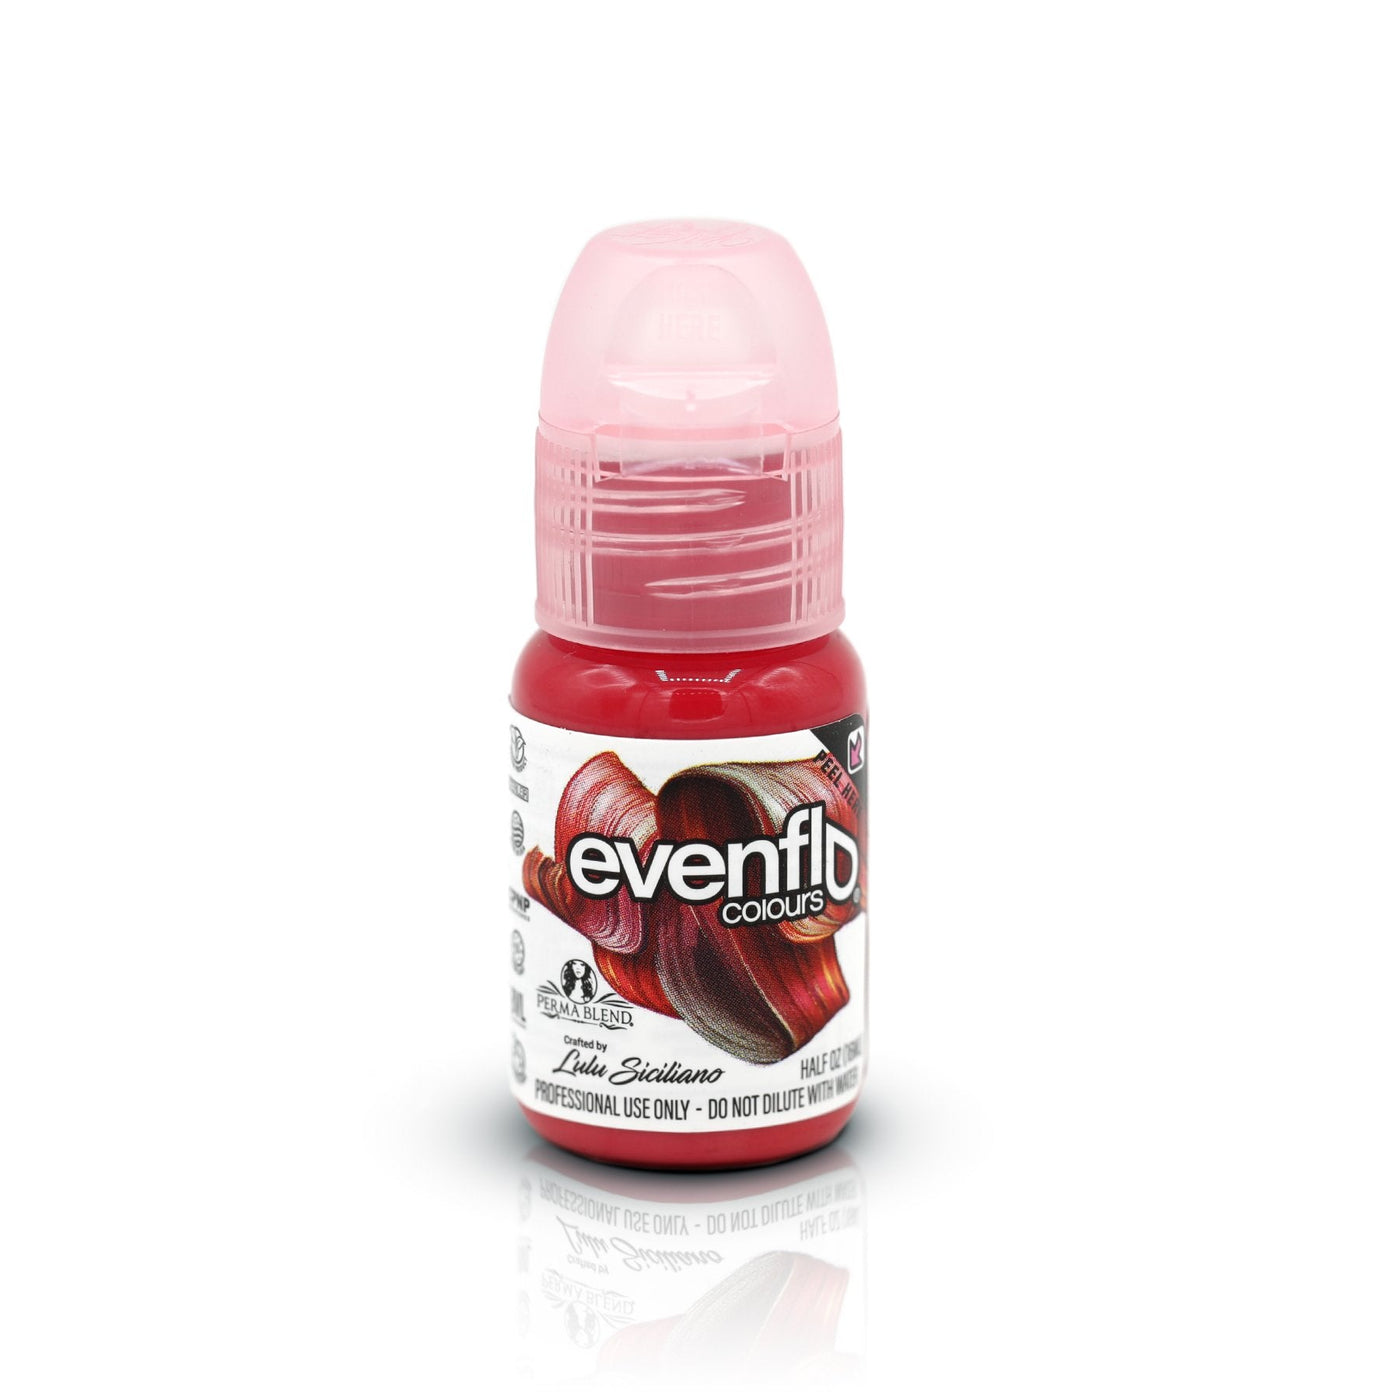 Perma Blend Evenflo Lip Set - PMU Pigments - FYT Tattoo Supplies Canada